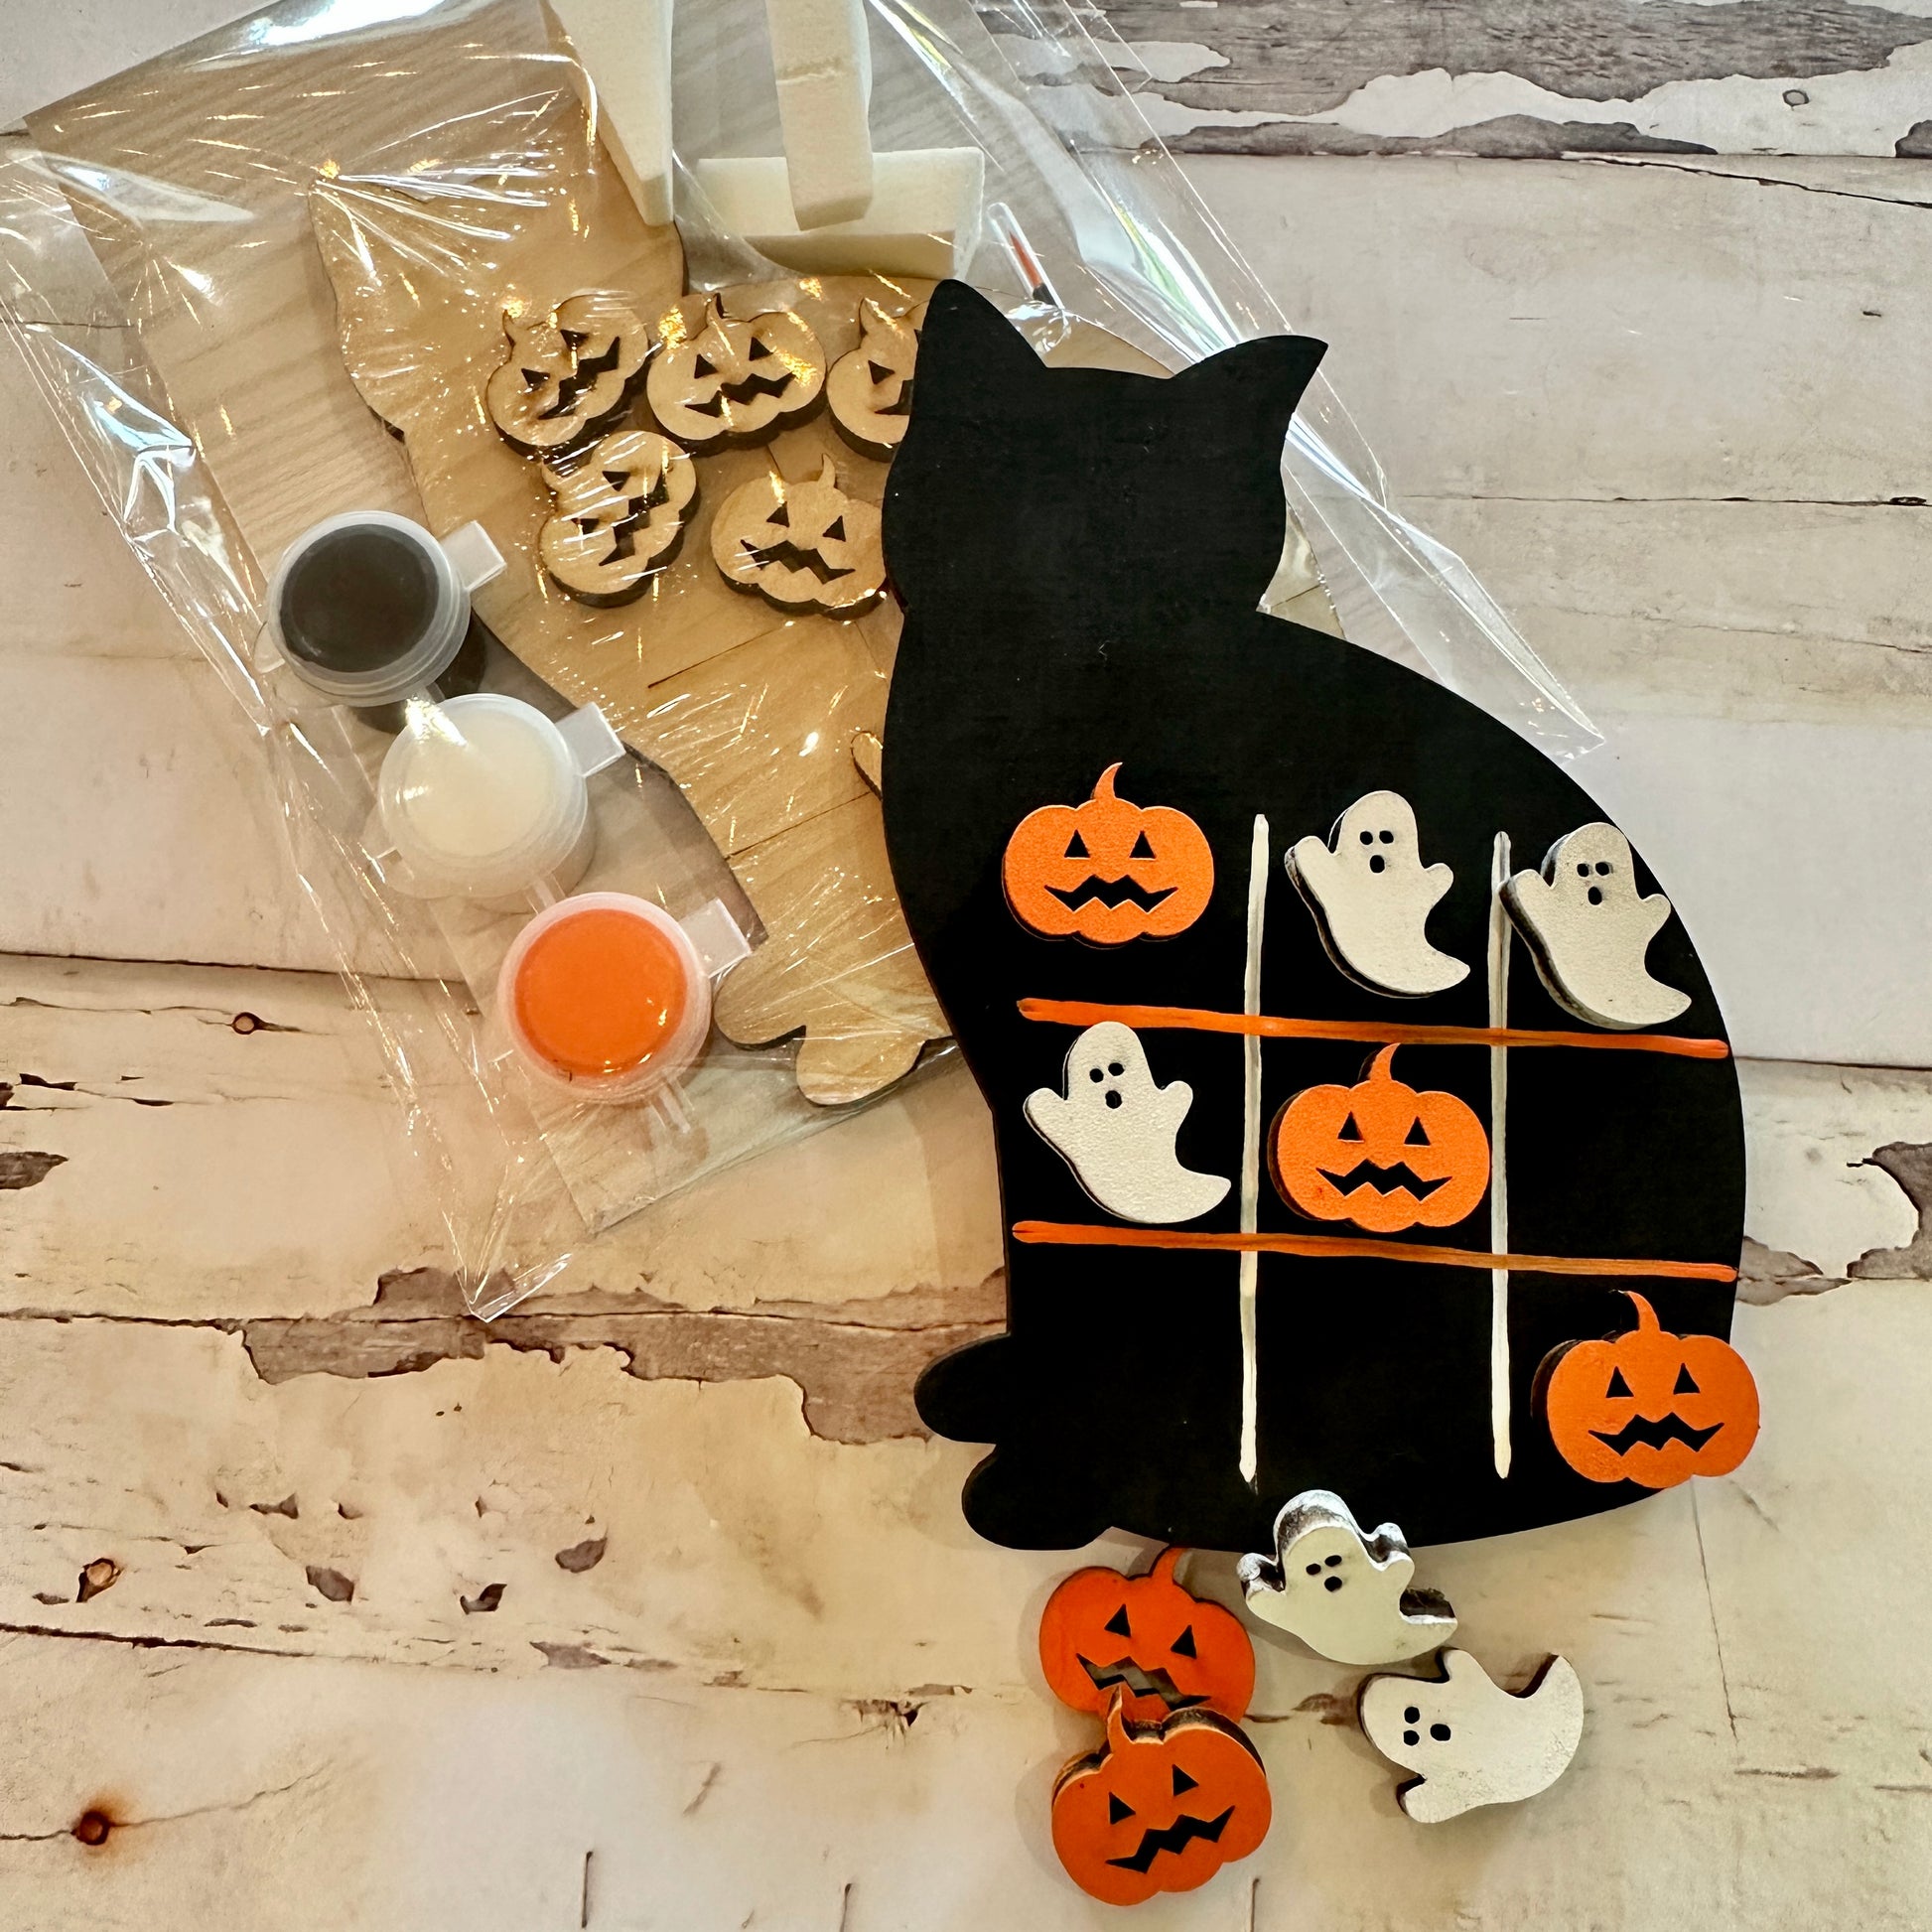 Halloween Arts & Crafts Kit for Kids